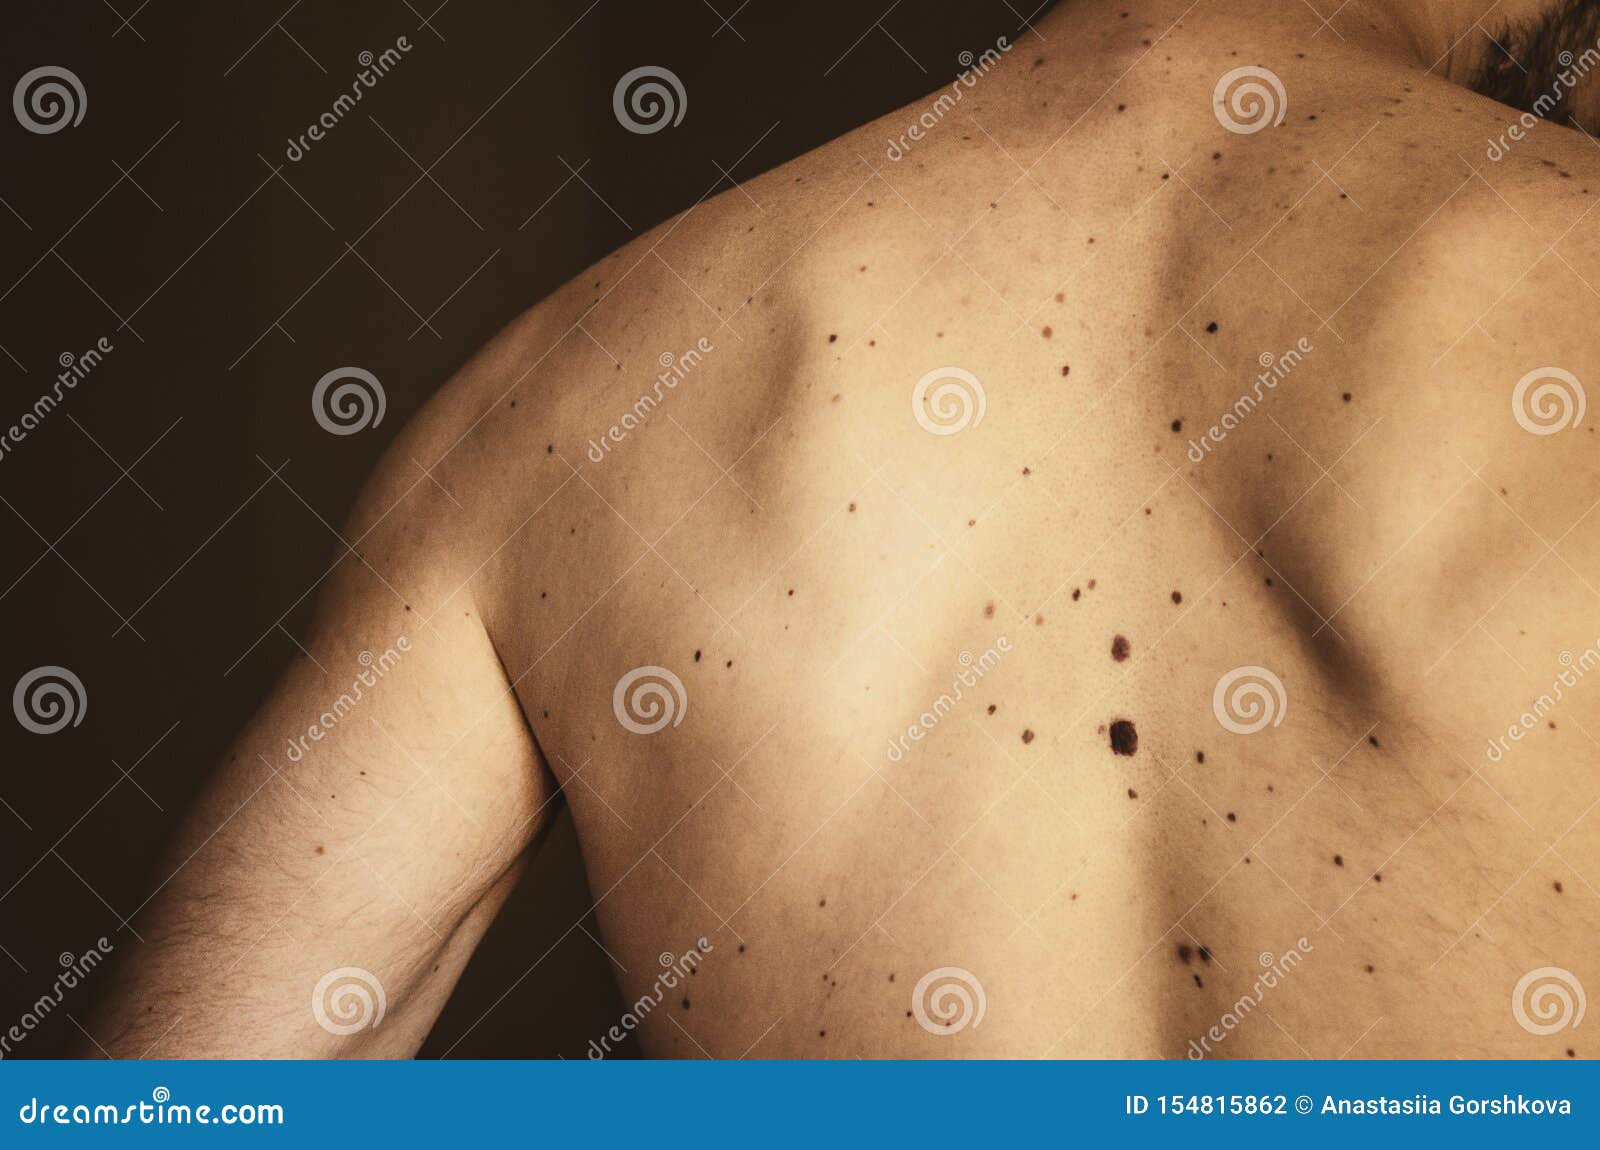 черные точки на груди у мужчин фото 13